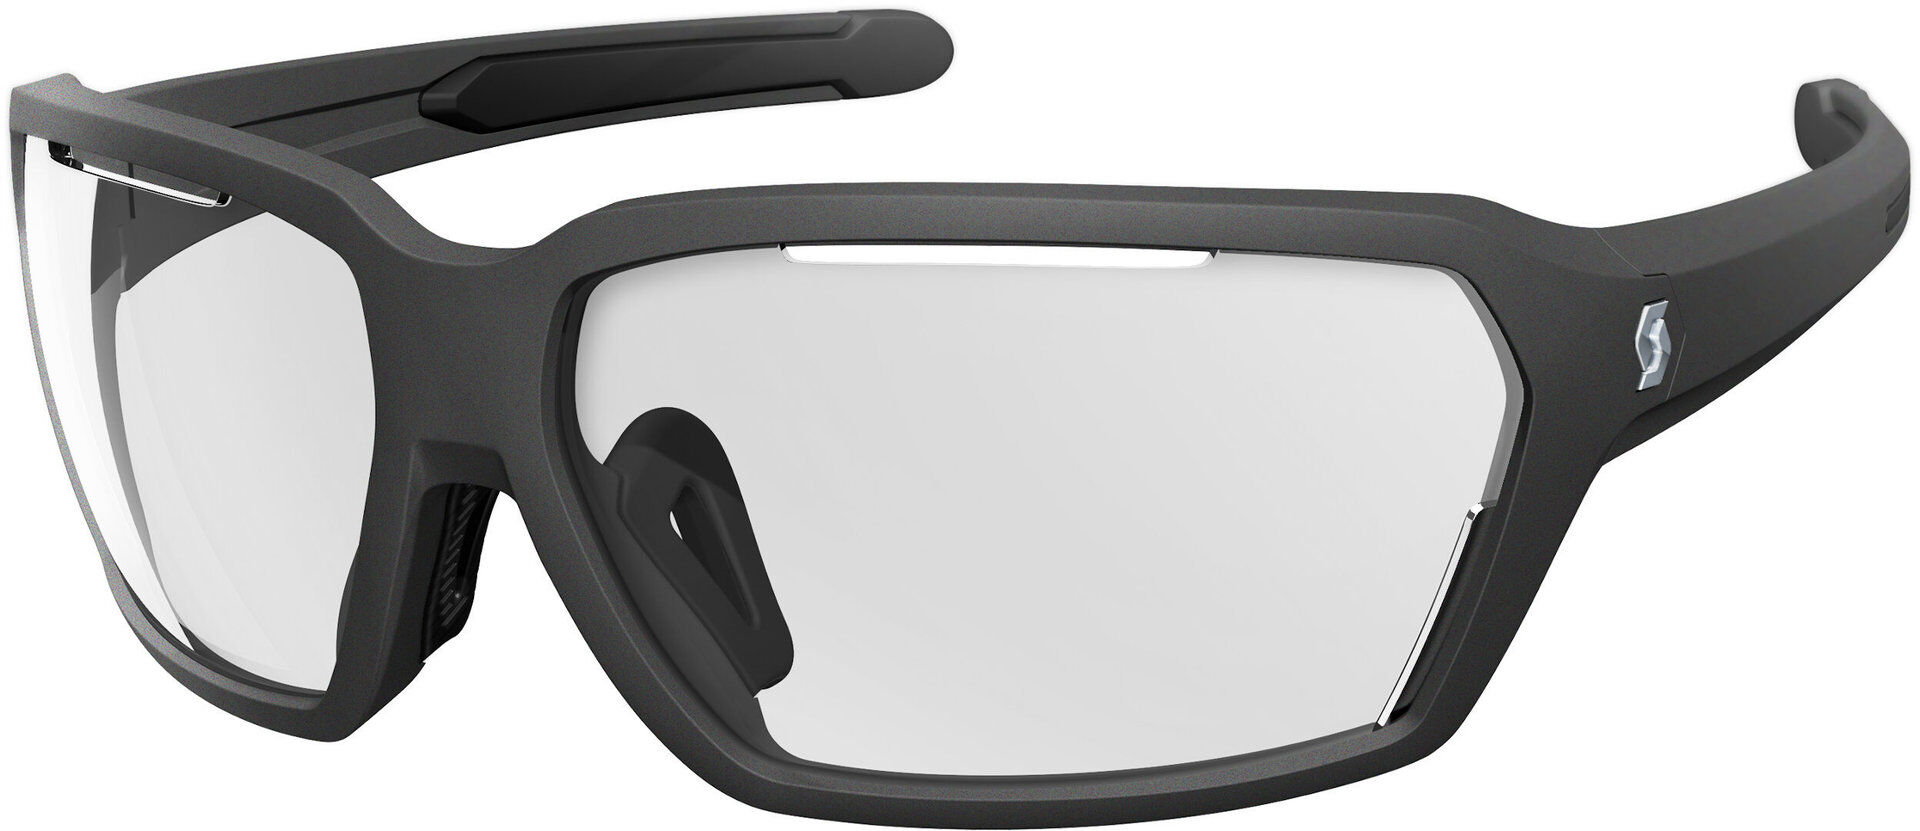 Scott Vector Gafas de sol - Negro (un tamaño)